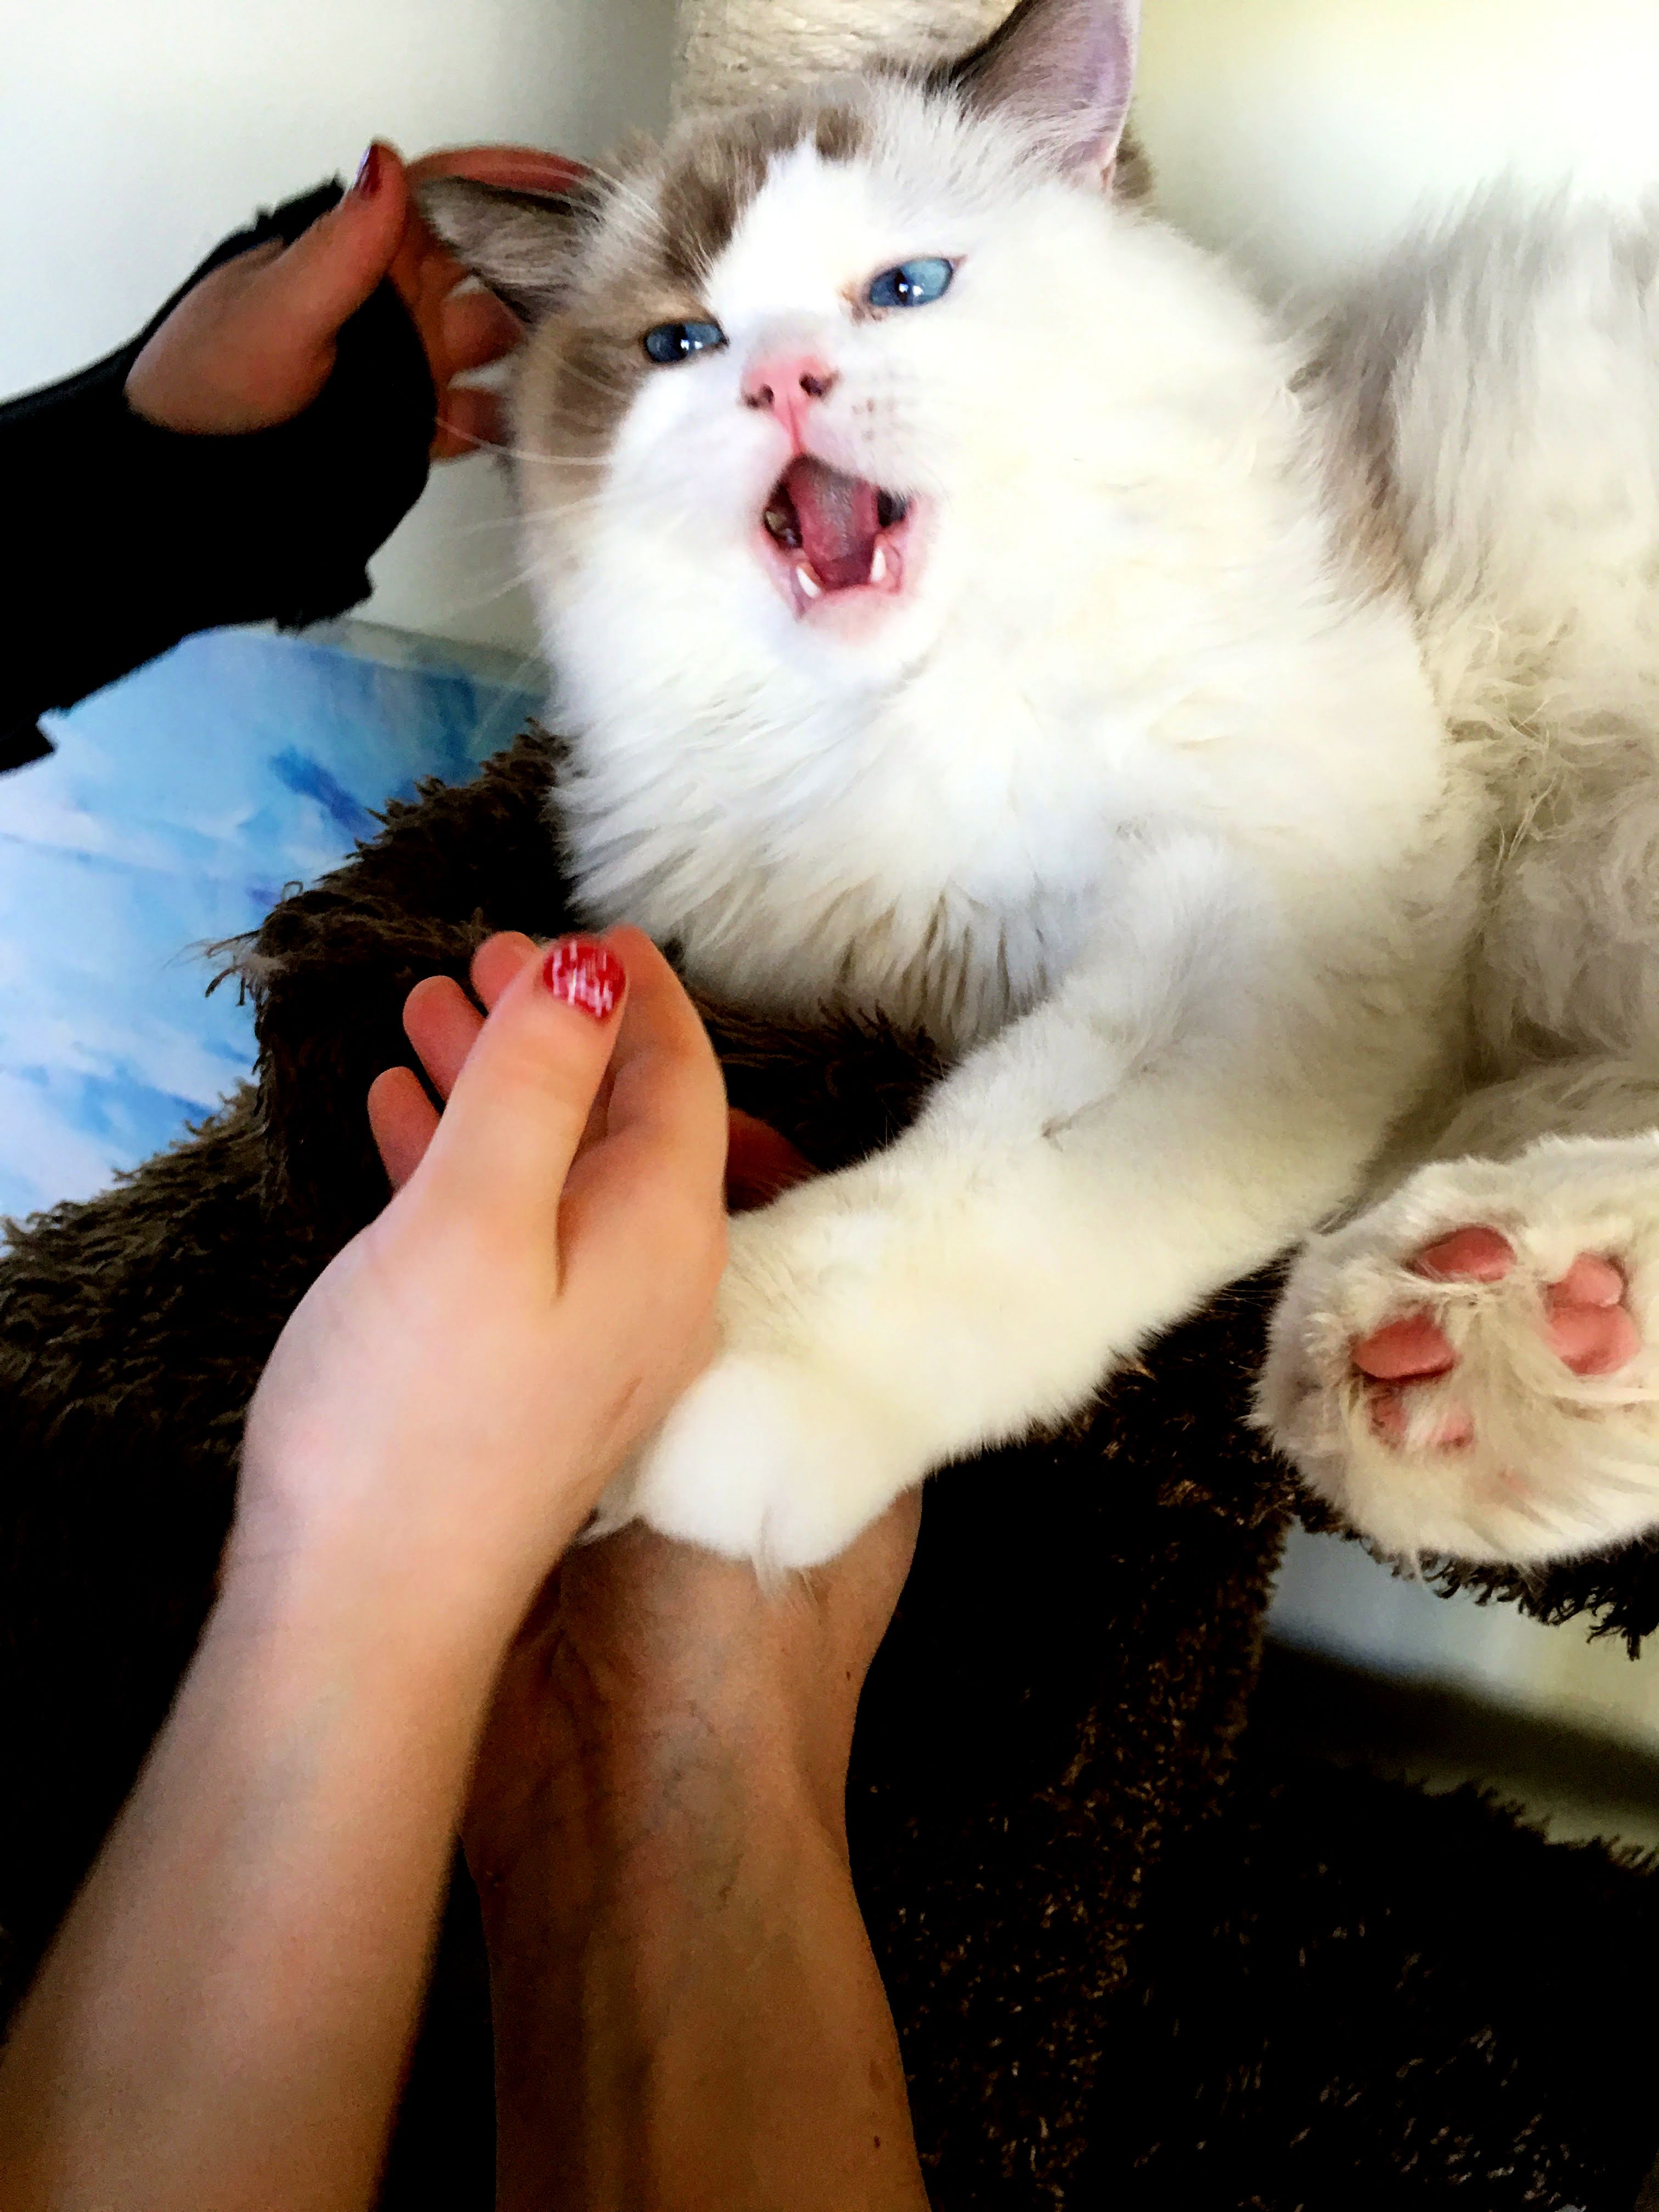 funny cat biting hand odd quirky behavior